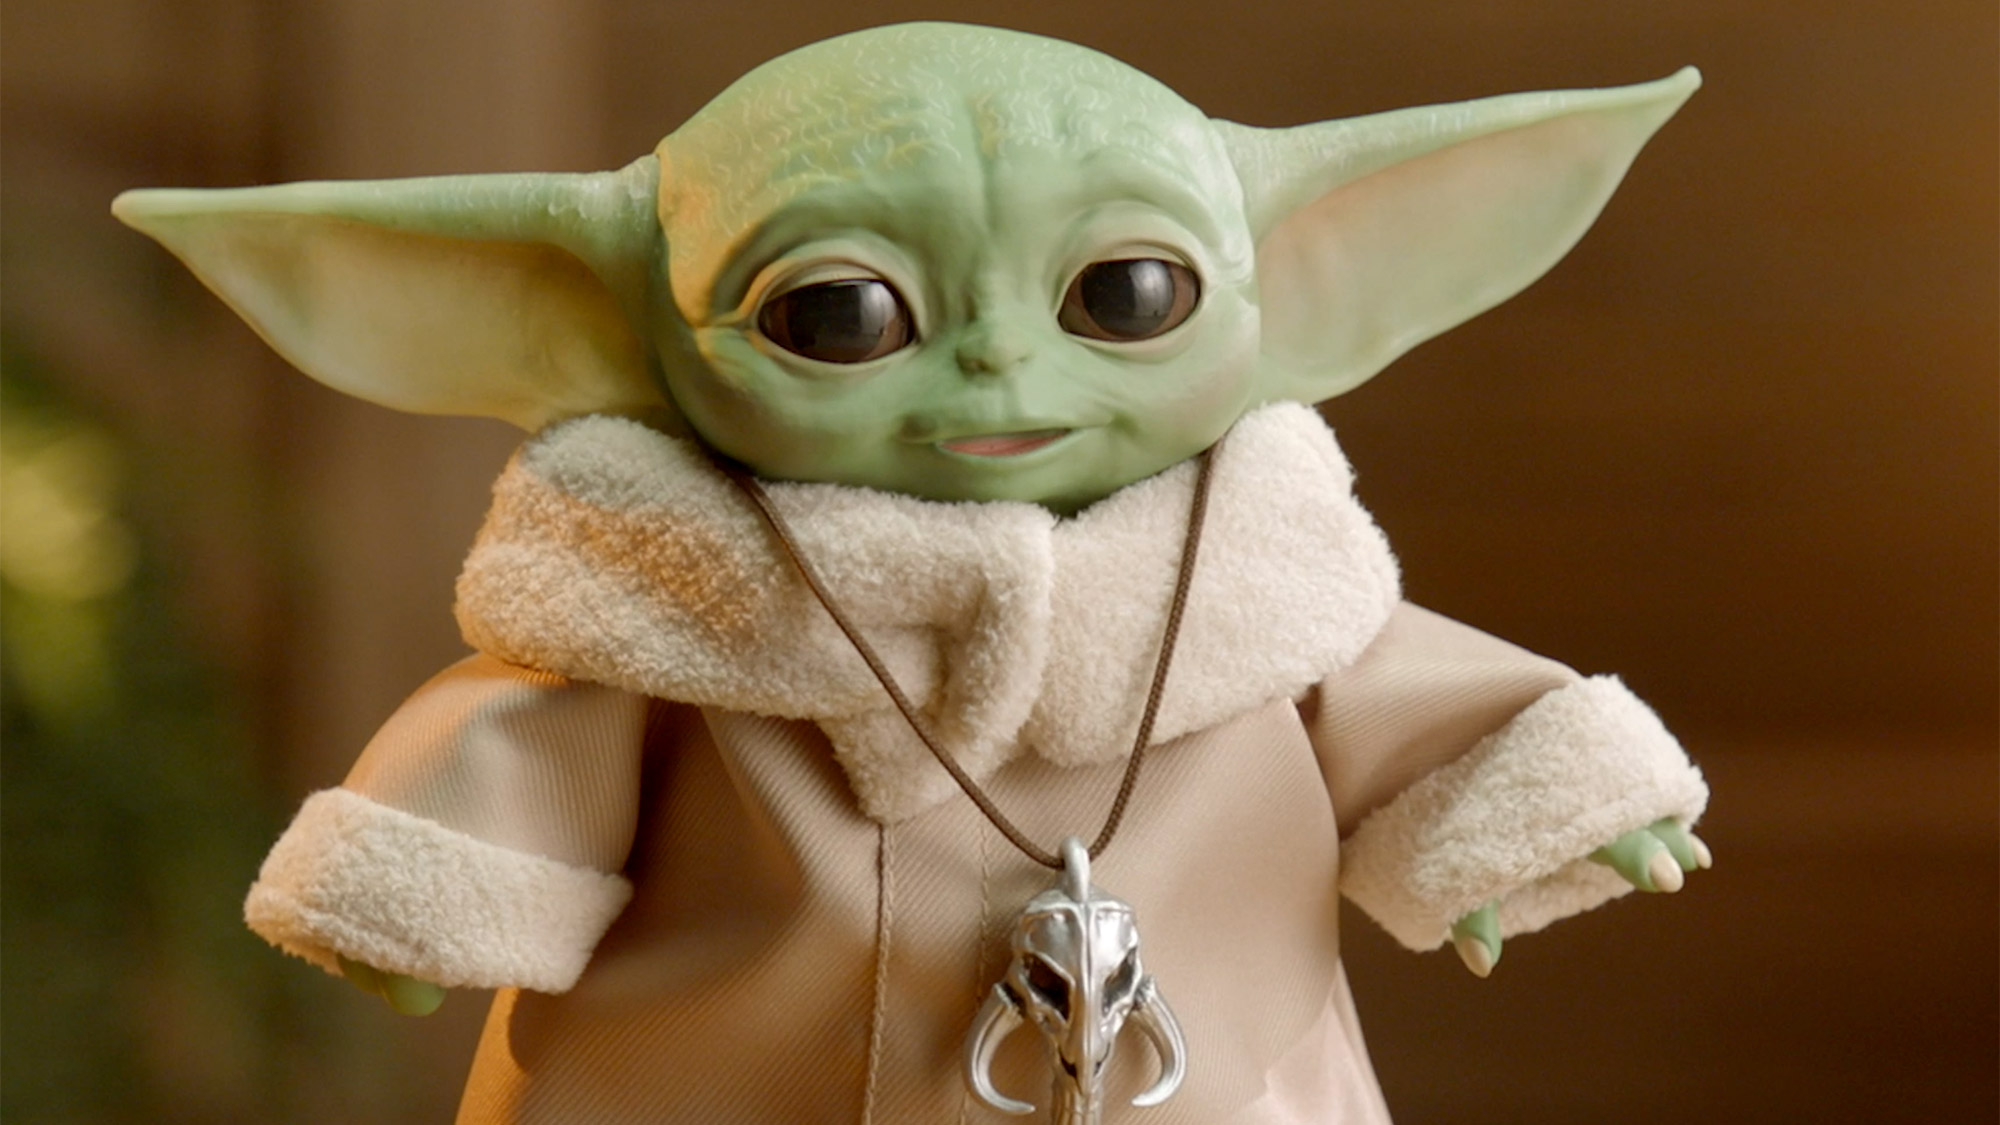 Star Wars Mandalorian The Child Baby Yoda Animatronic Figure Edition In Hand 